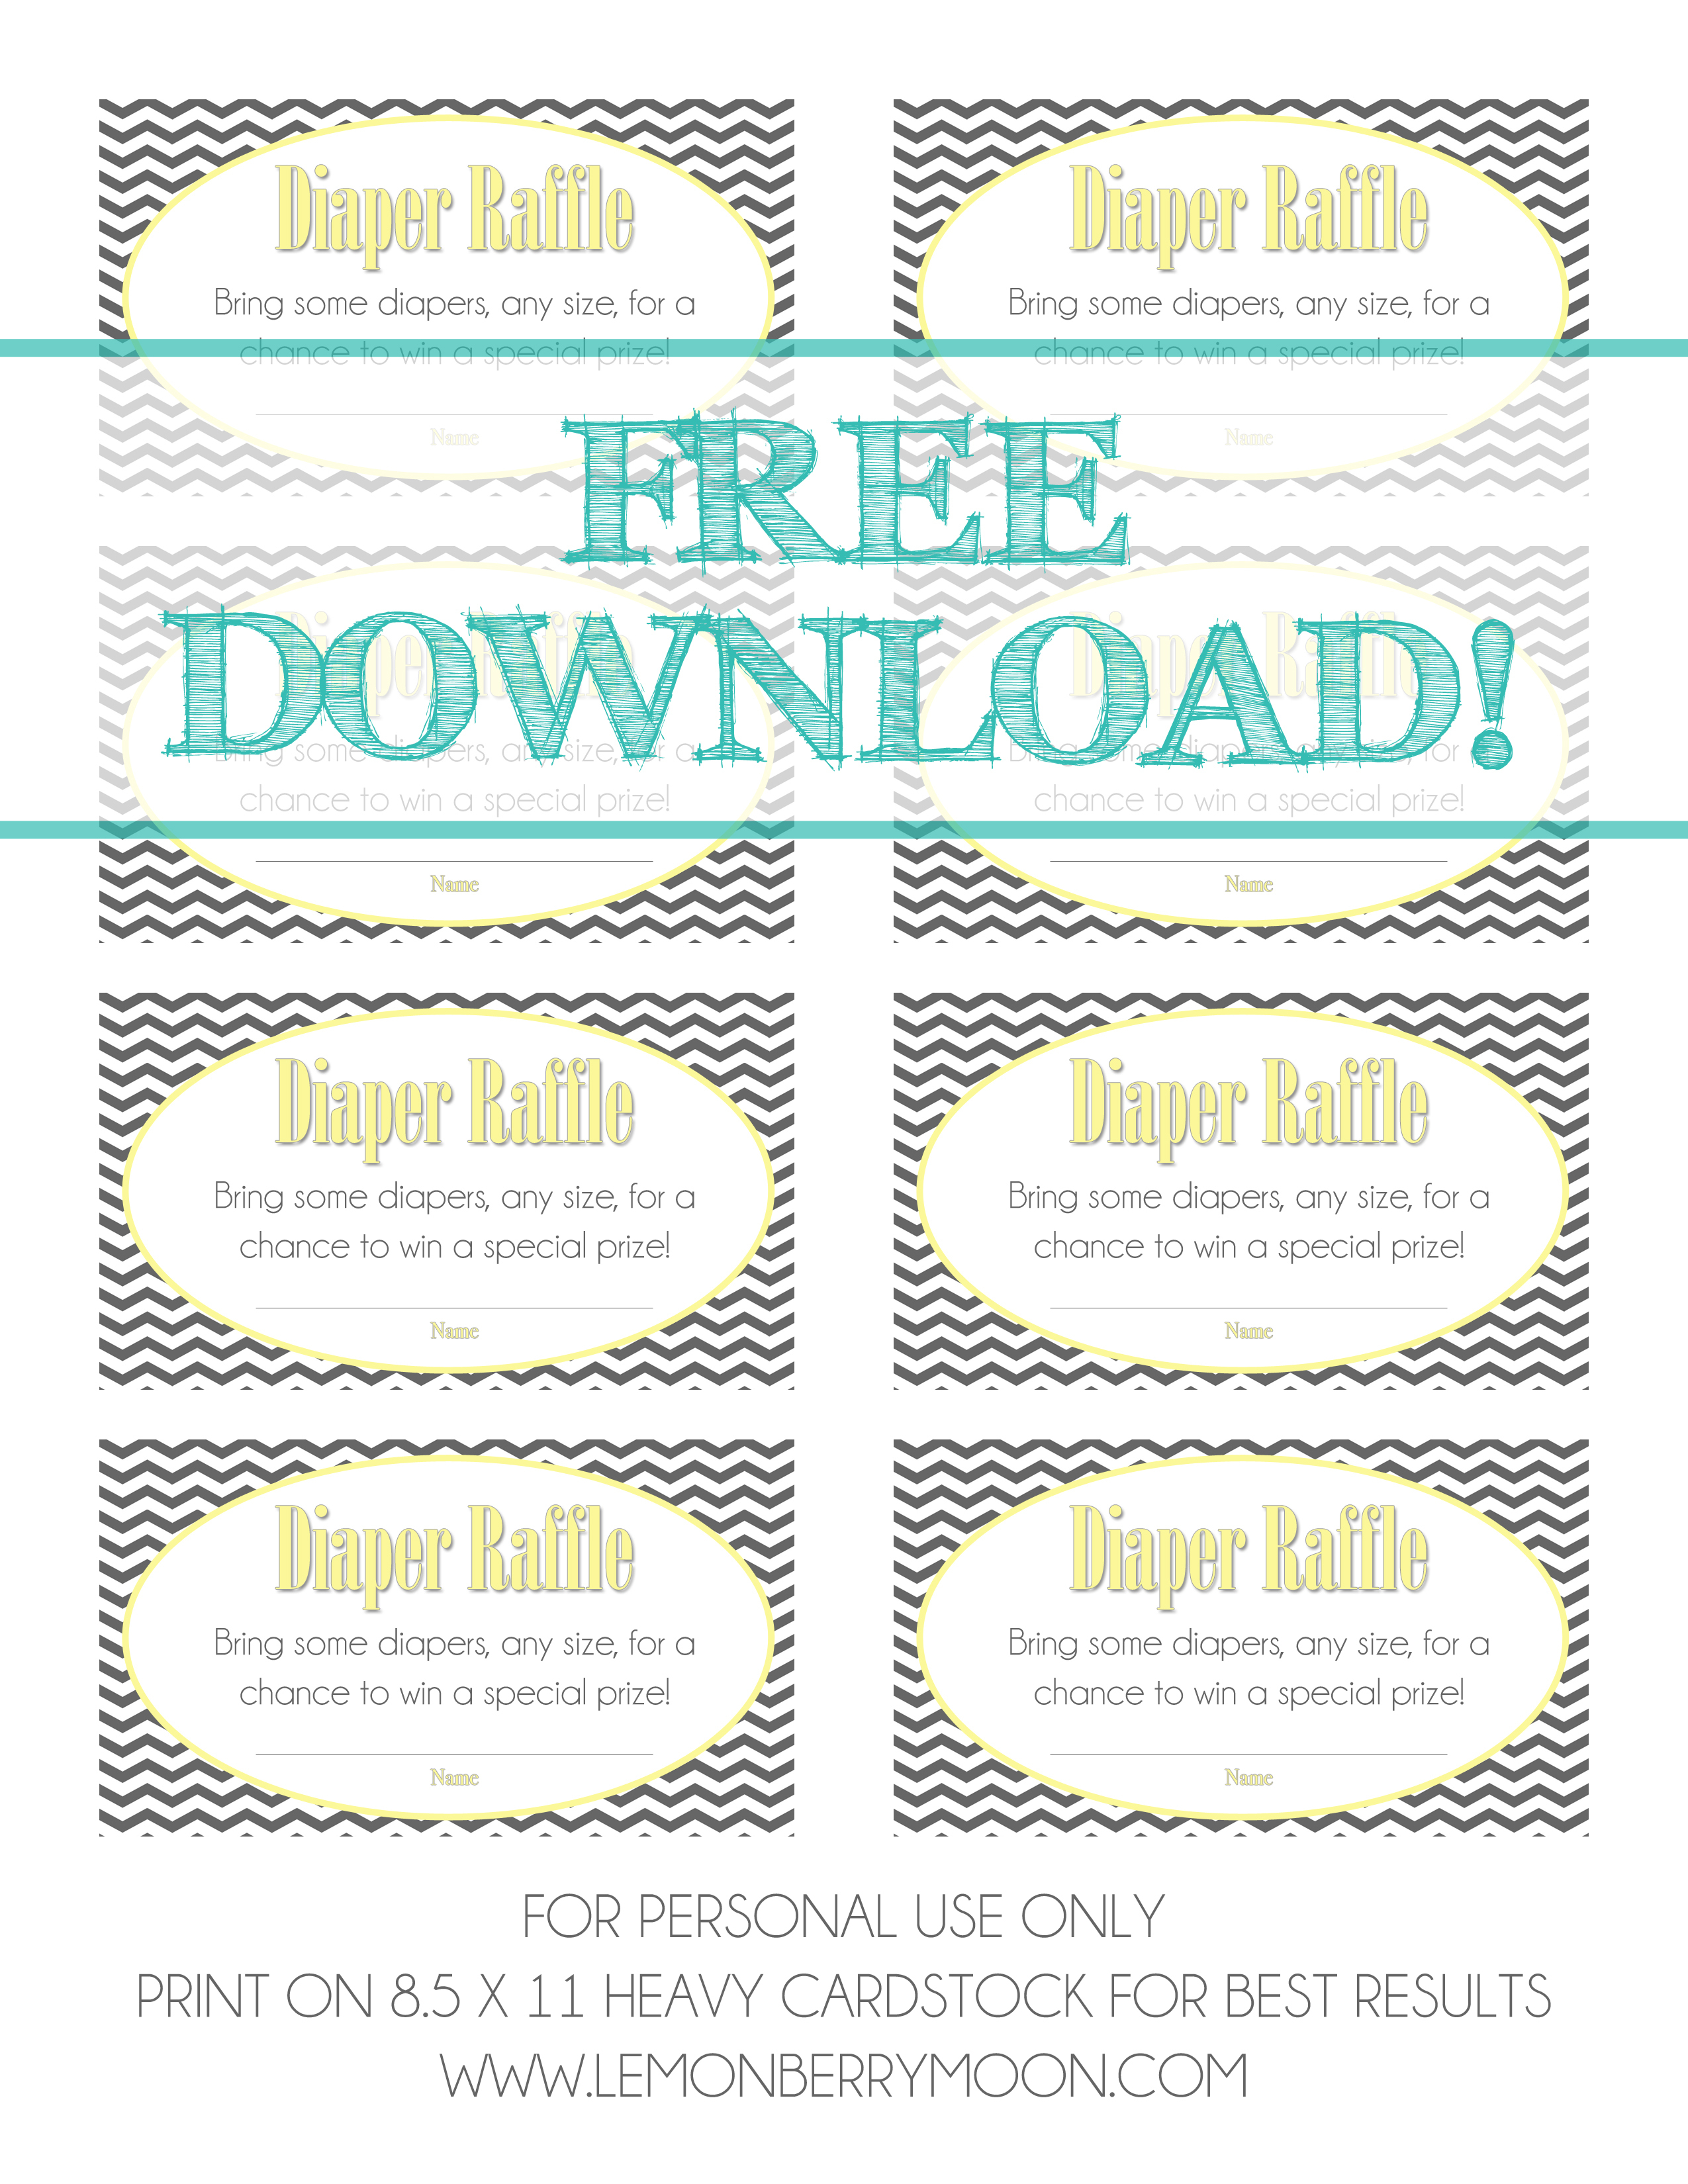 Baby Shower Diaper Raffle {Free Download} – Lemonberrymoon - Diaper Raffle Free Printable